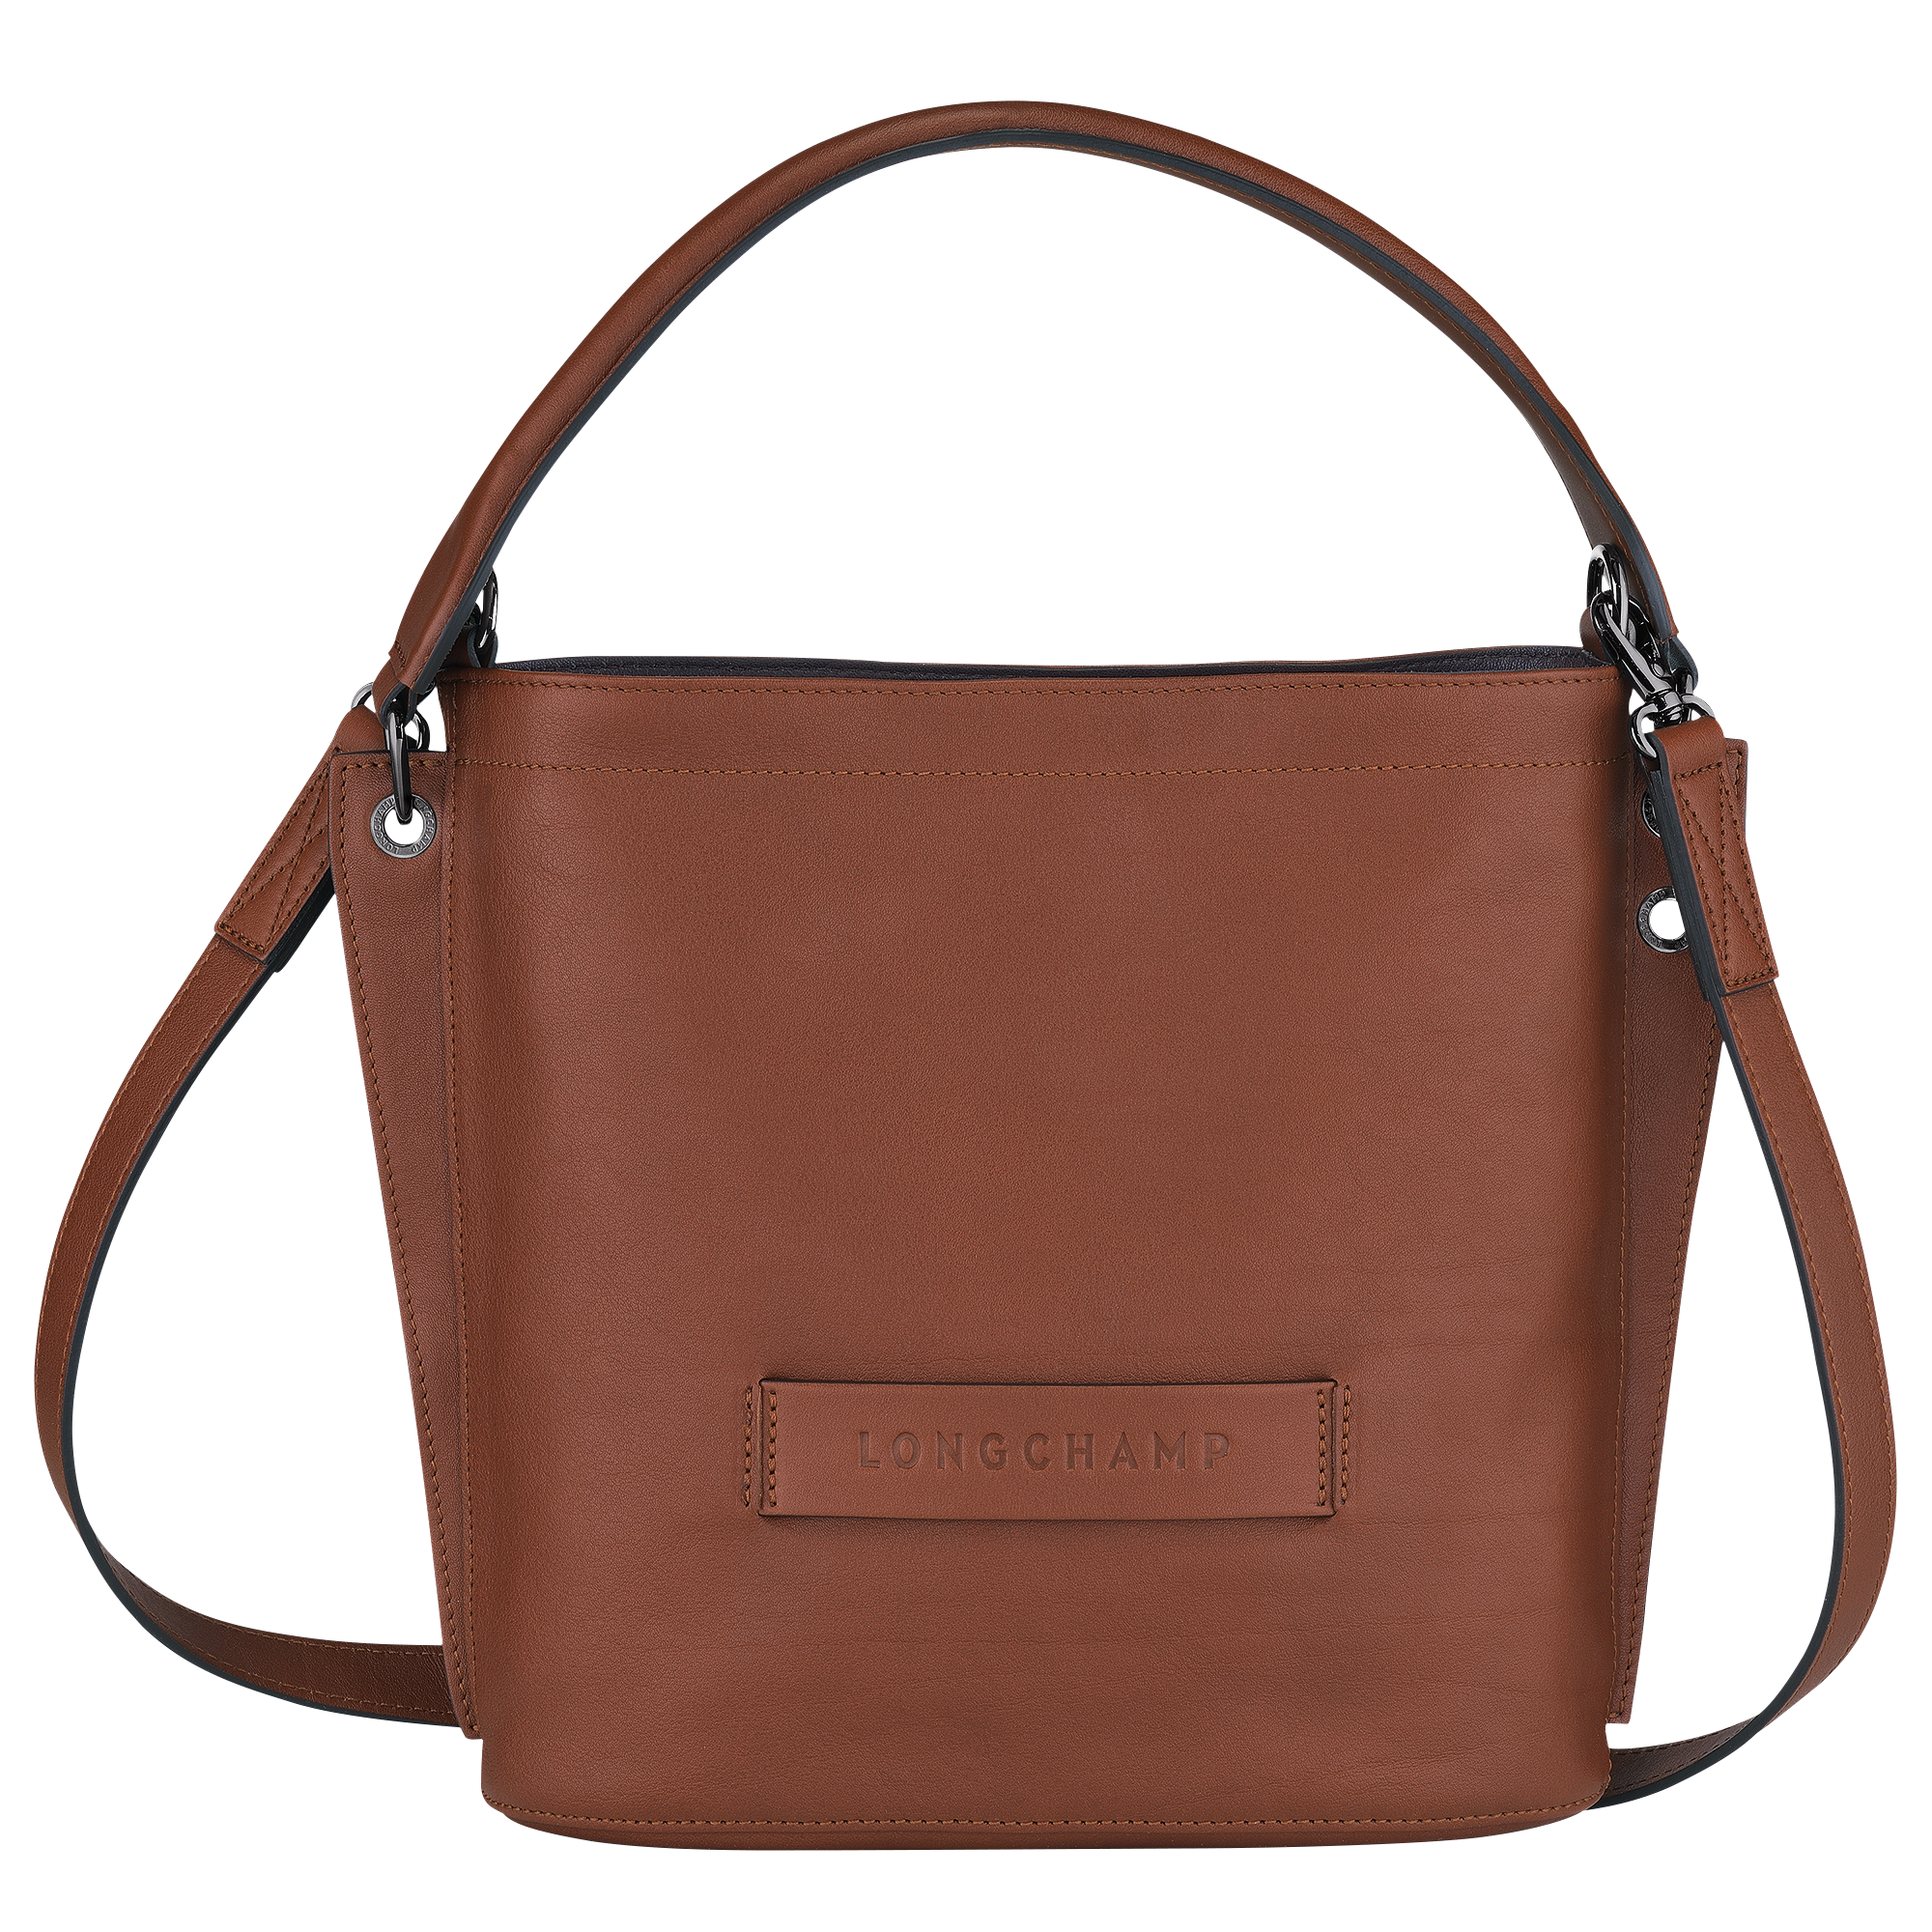 Longchamp 3D Crossbody Bag in Cognac - 1 - L2084772504